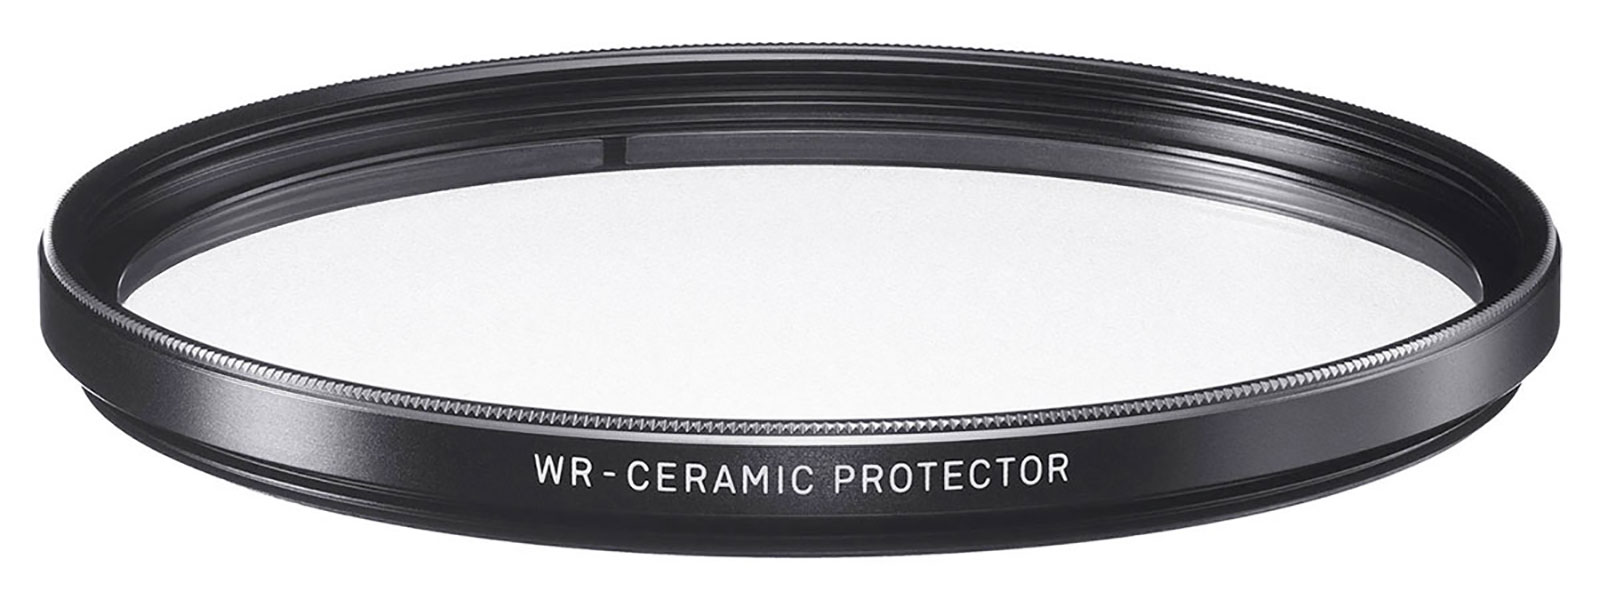 Sigma-WR-Ceramic-Protector-Filter